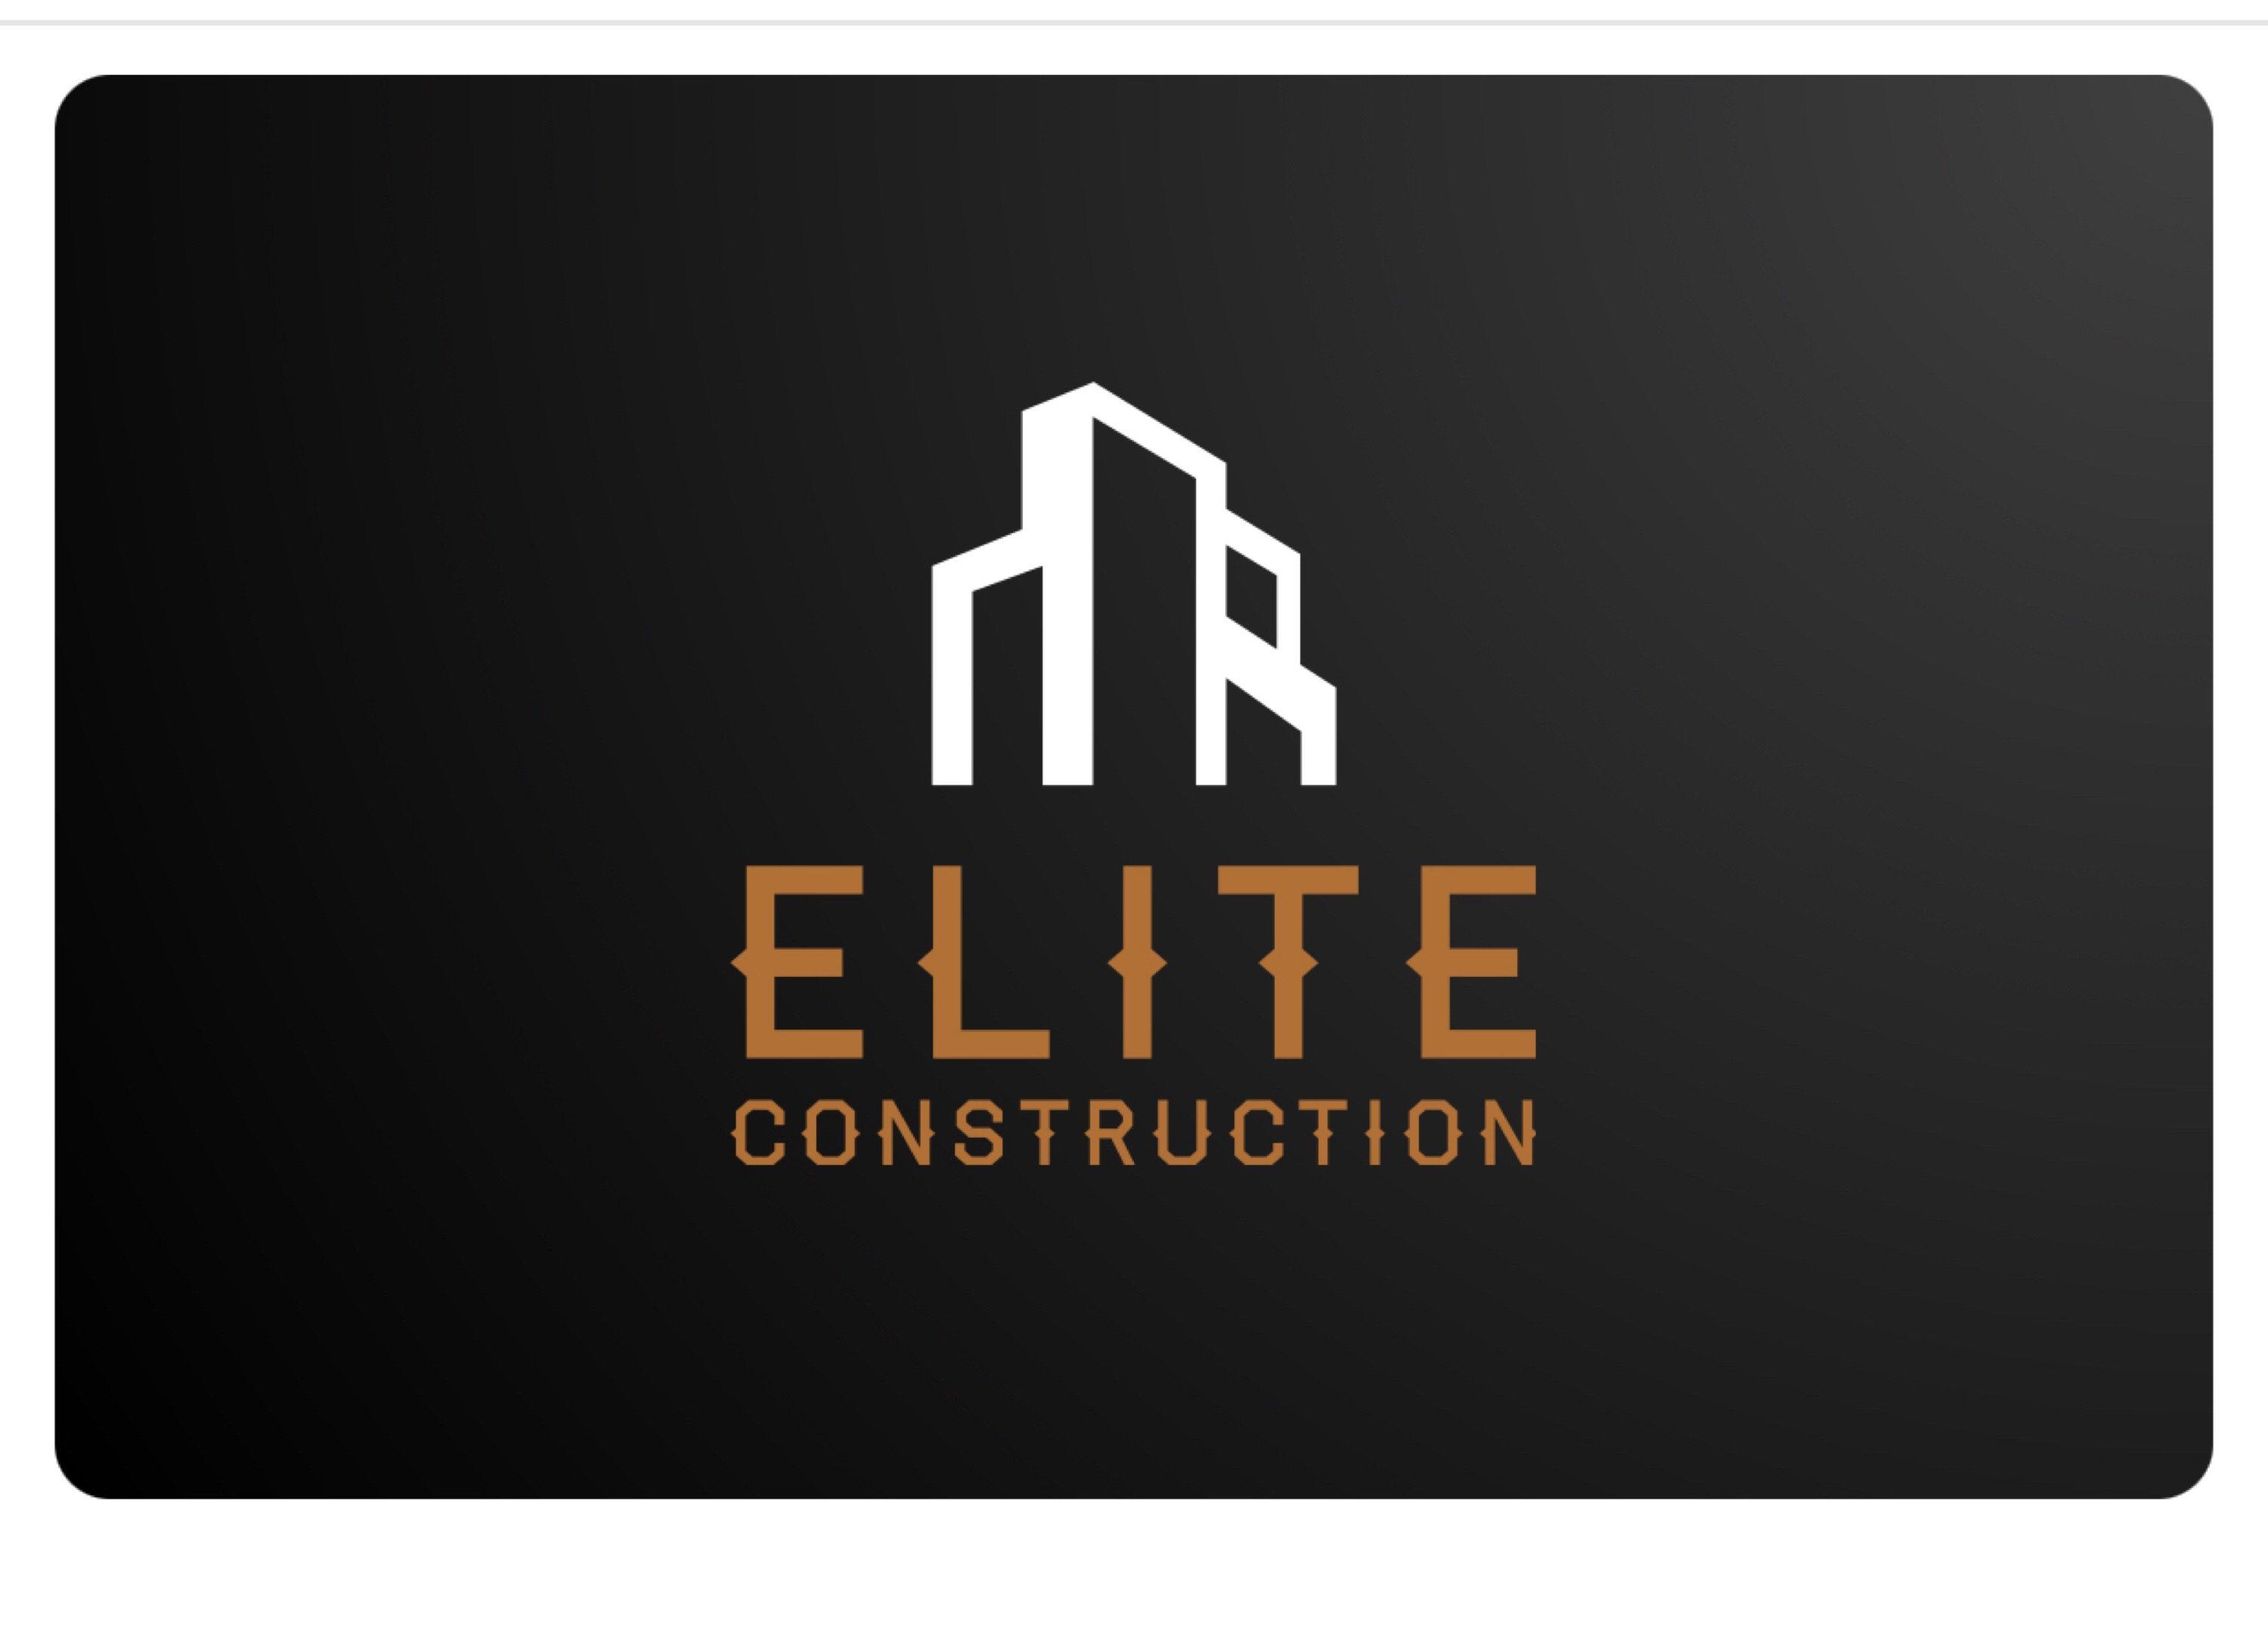 Elite Construction Logo